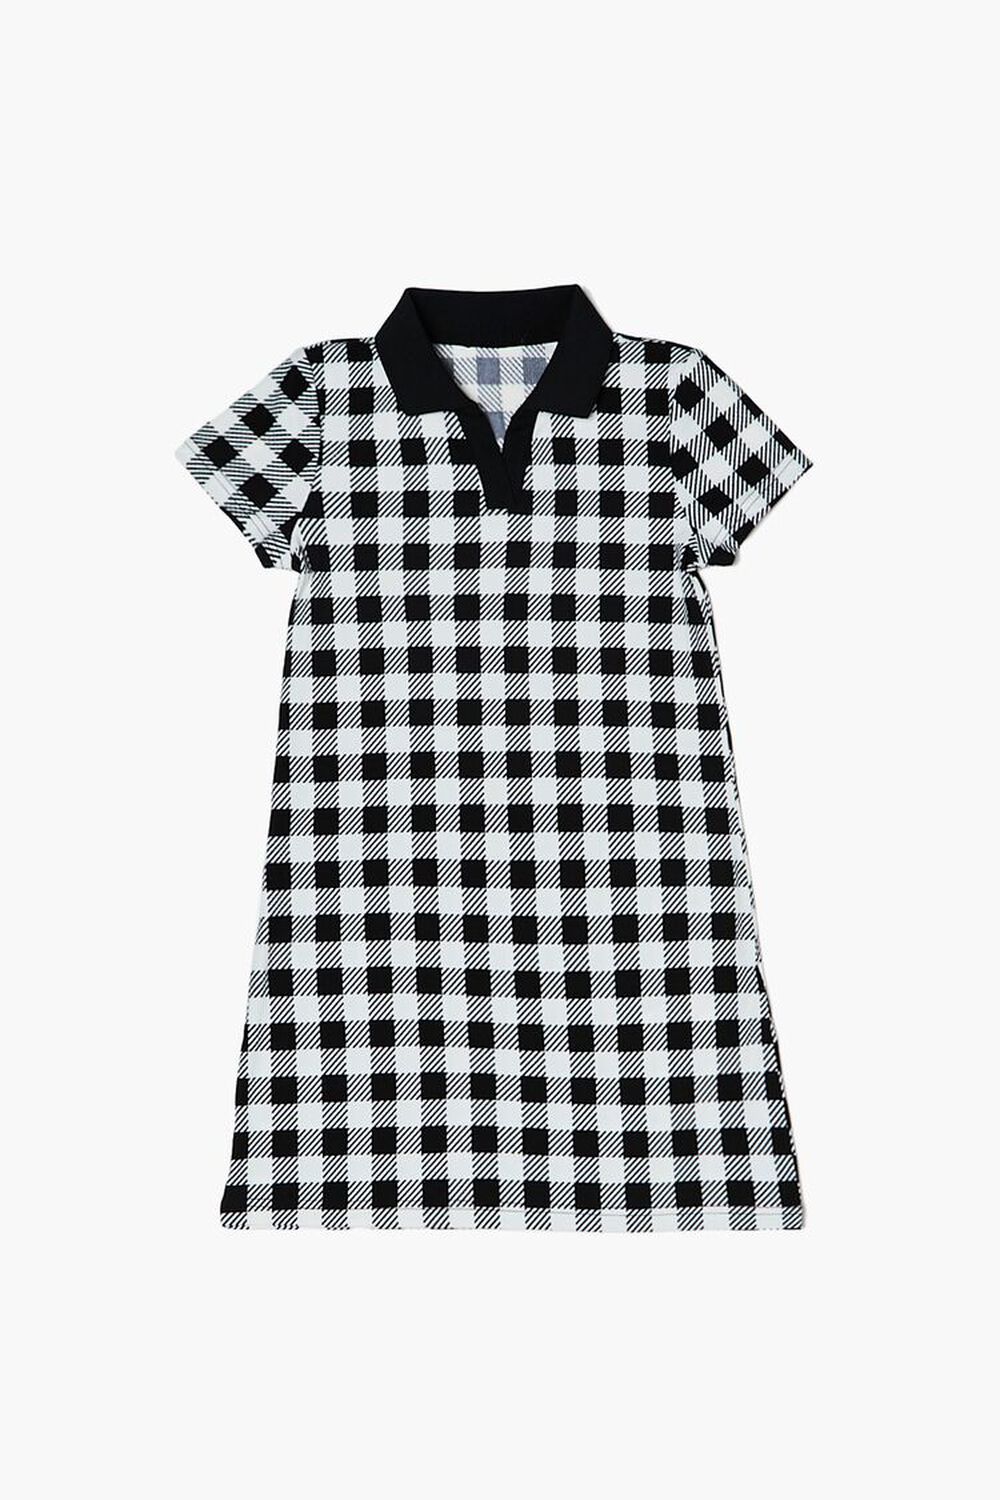 BLACK/WHITE Girls Checkered Dress (Kids), image 1